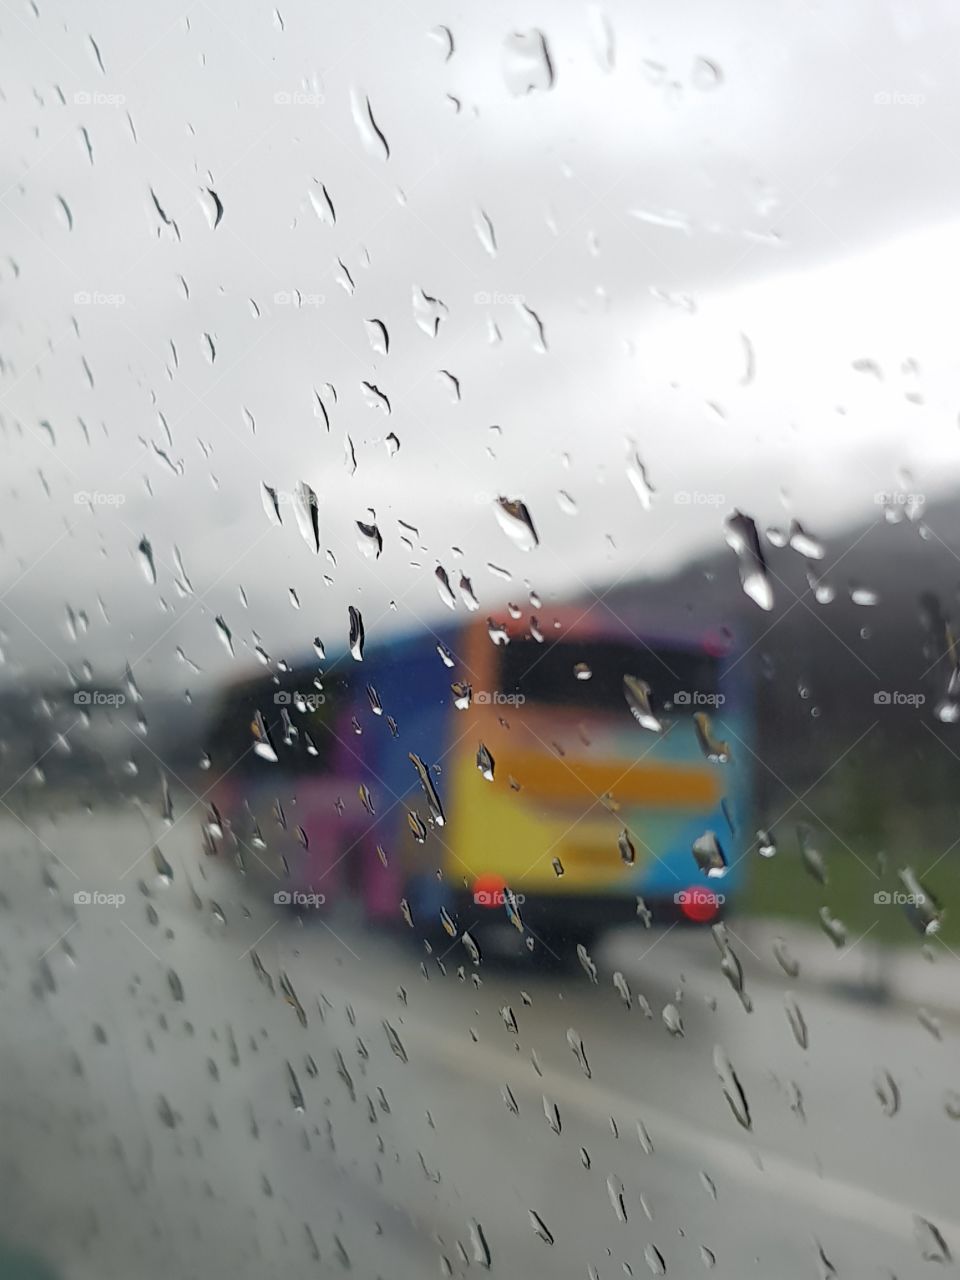 Colorful bus through the sad rainy glass